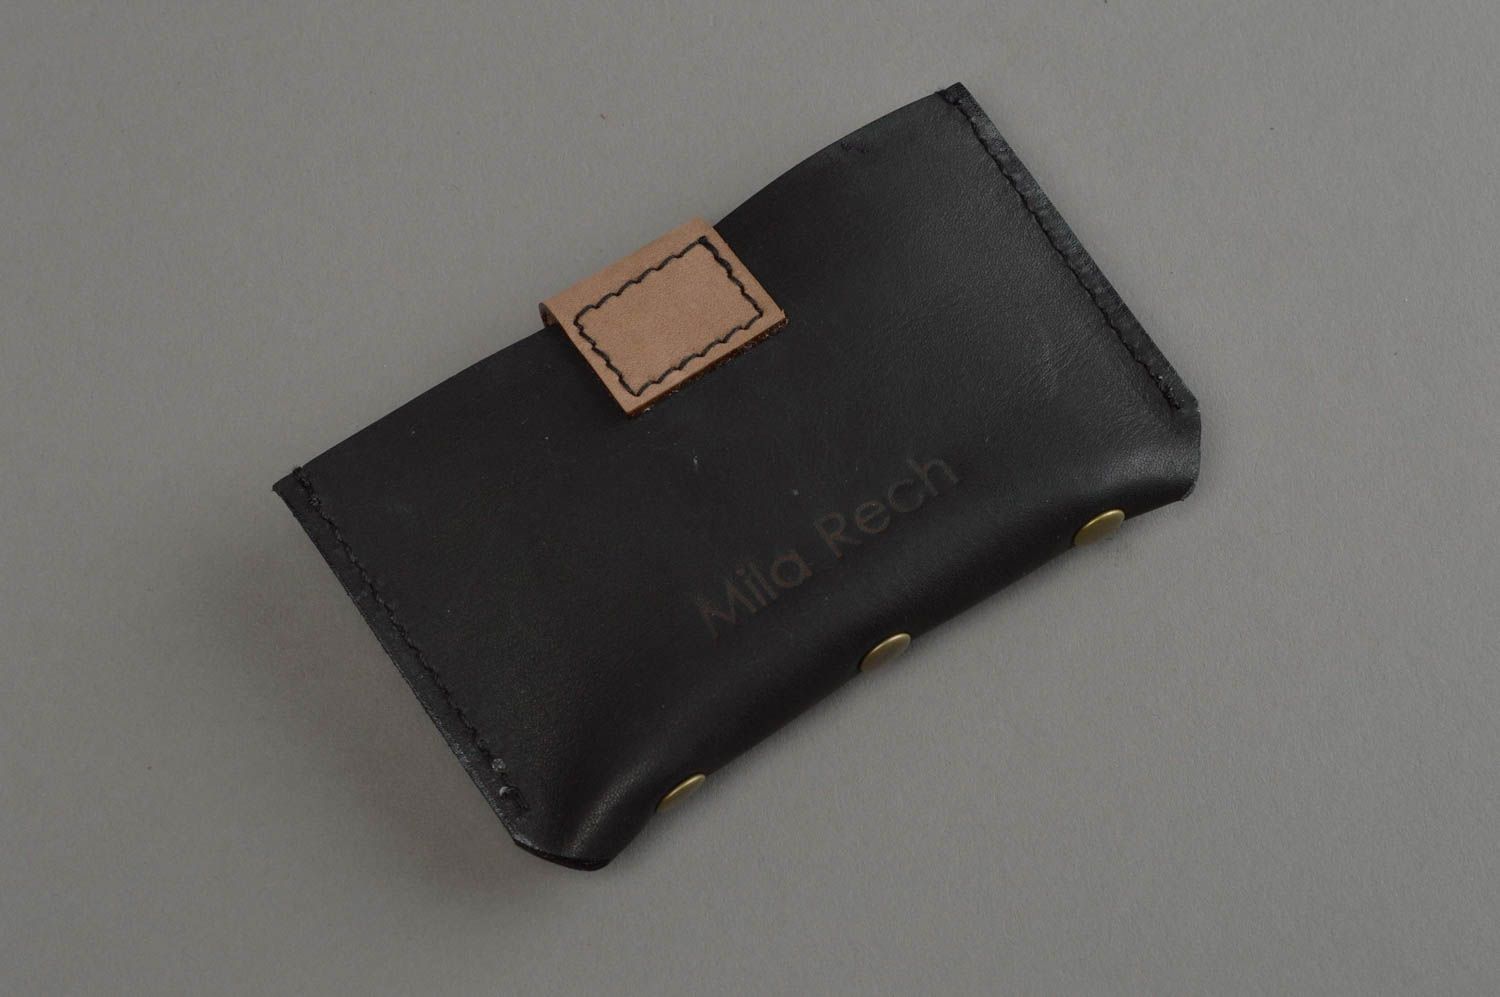 Stylish business card case leather accessories designer unusual present photo 9